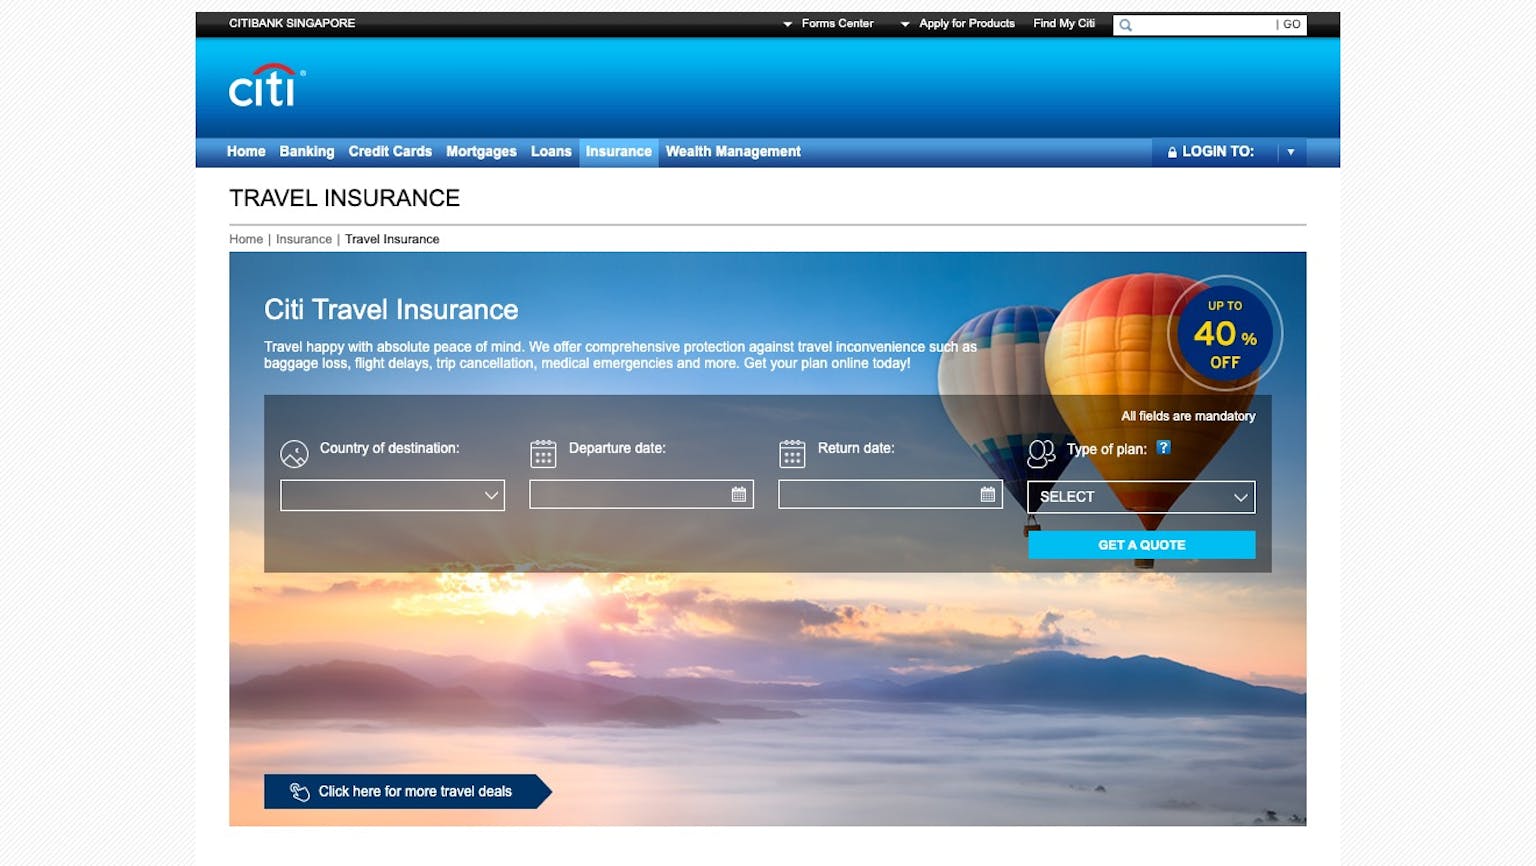 Citi Travel Insurance